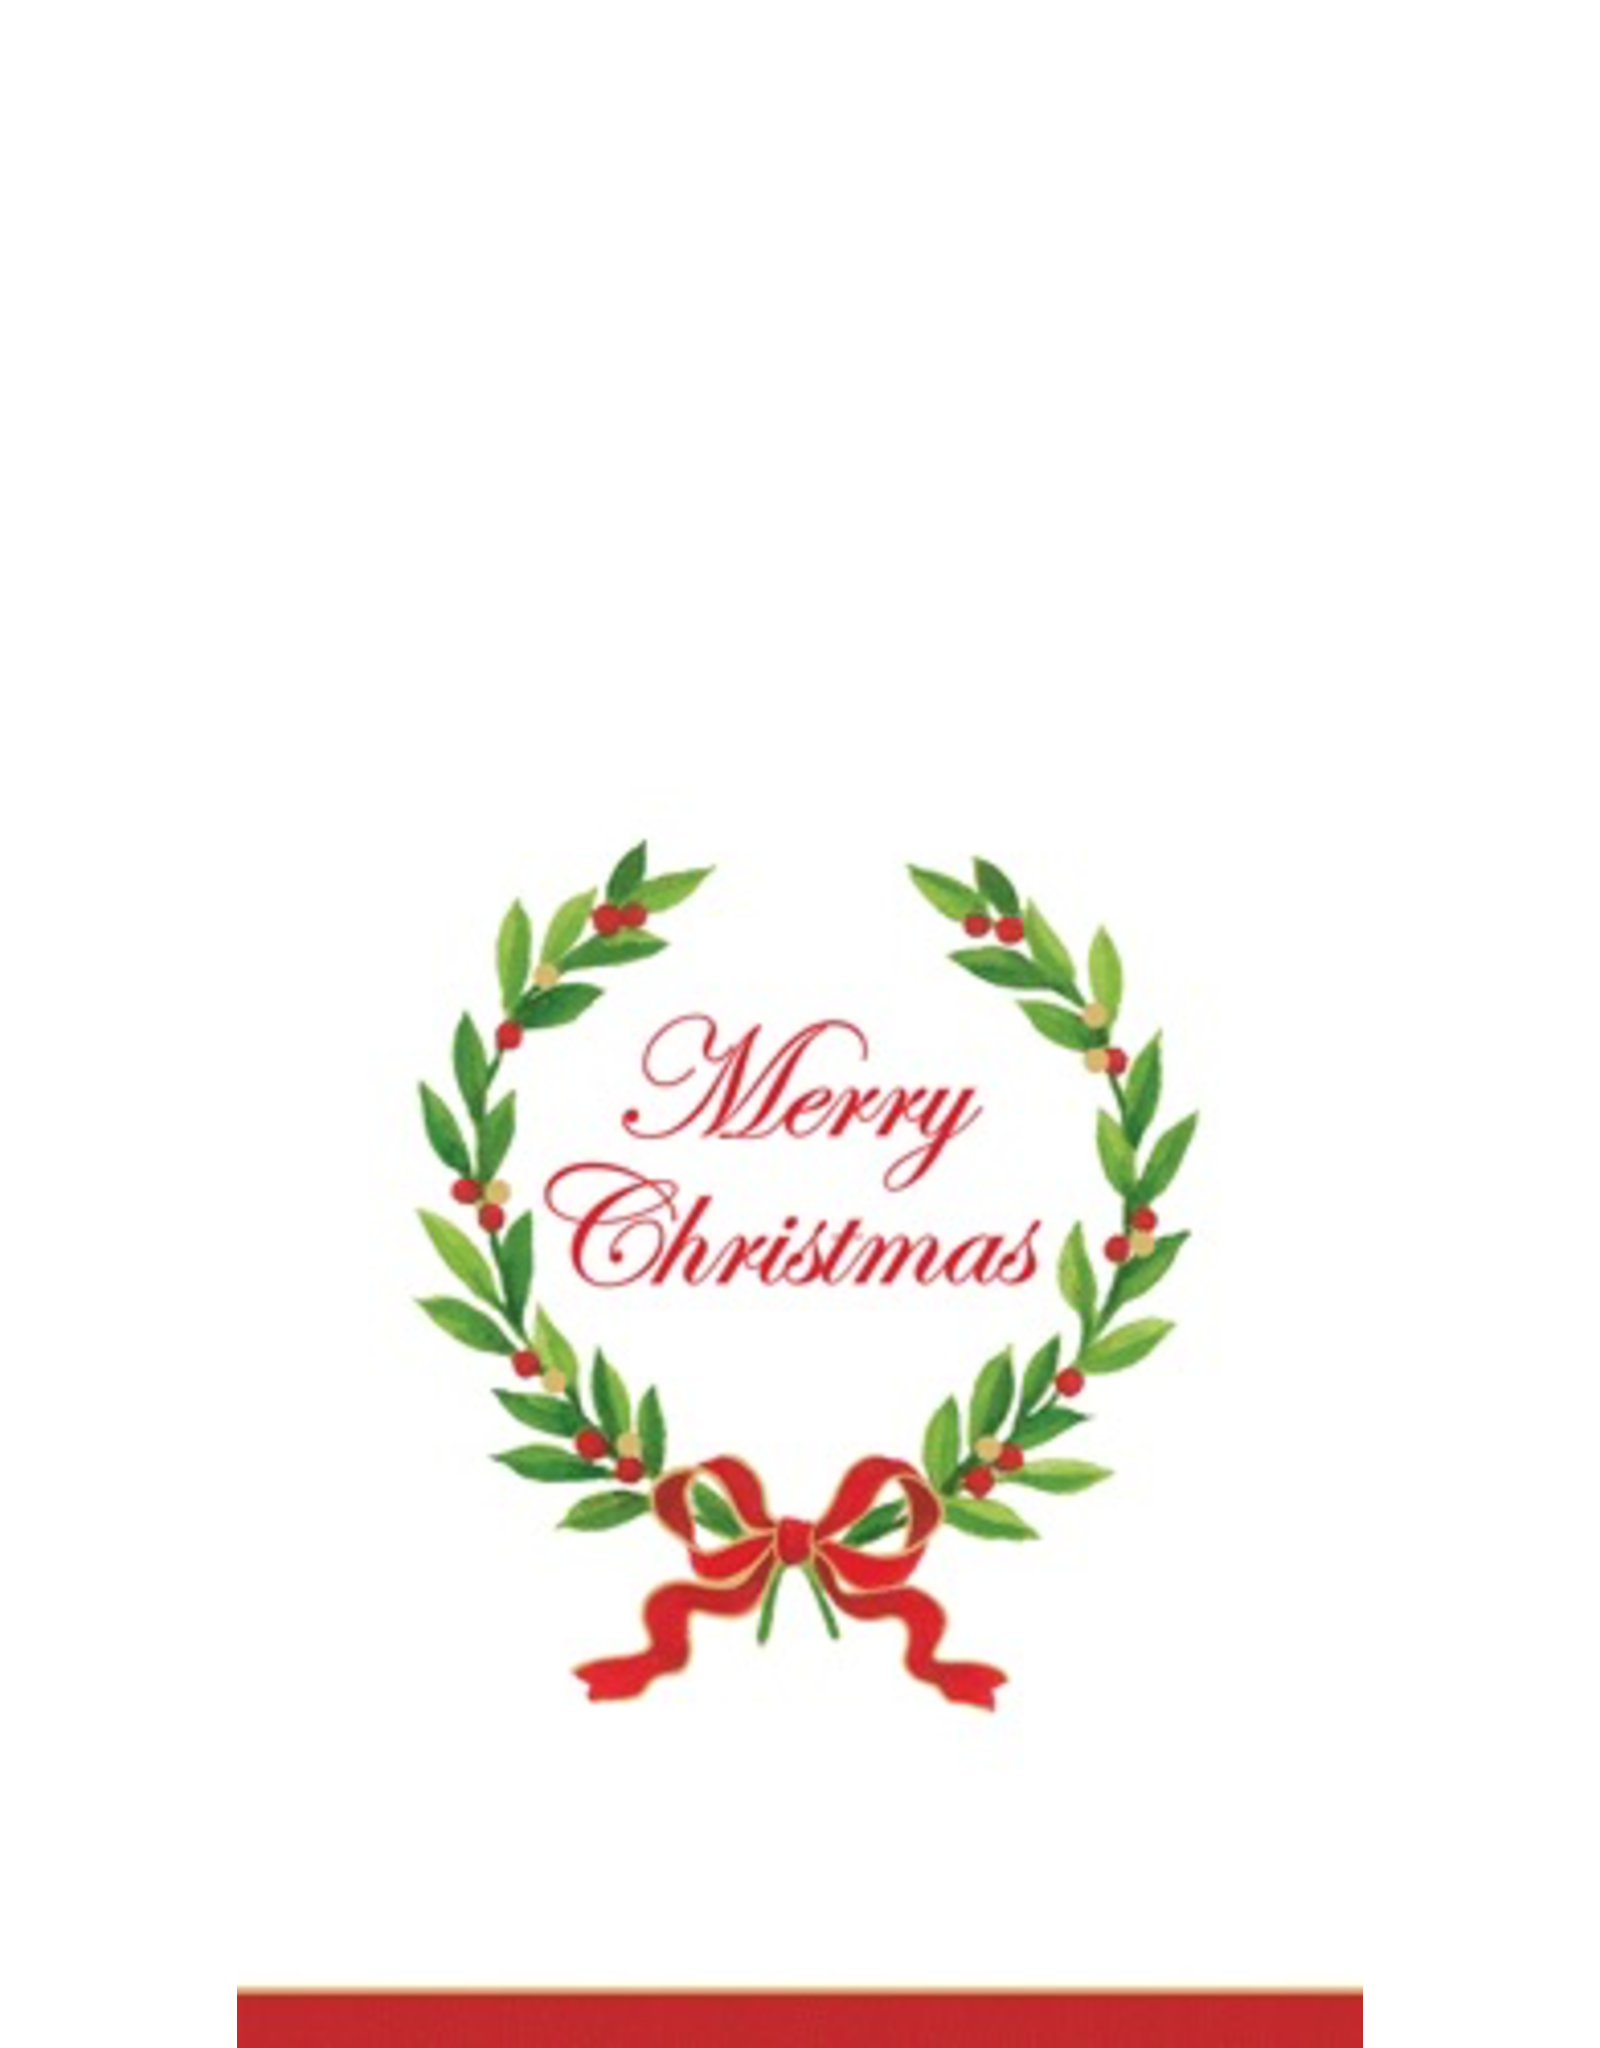 Caspari Merry Christmas Paper Guest Towel Napkins 15pk Laurel Wreath